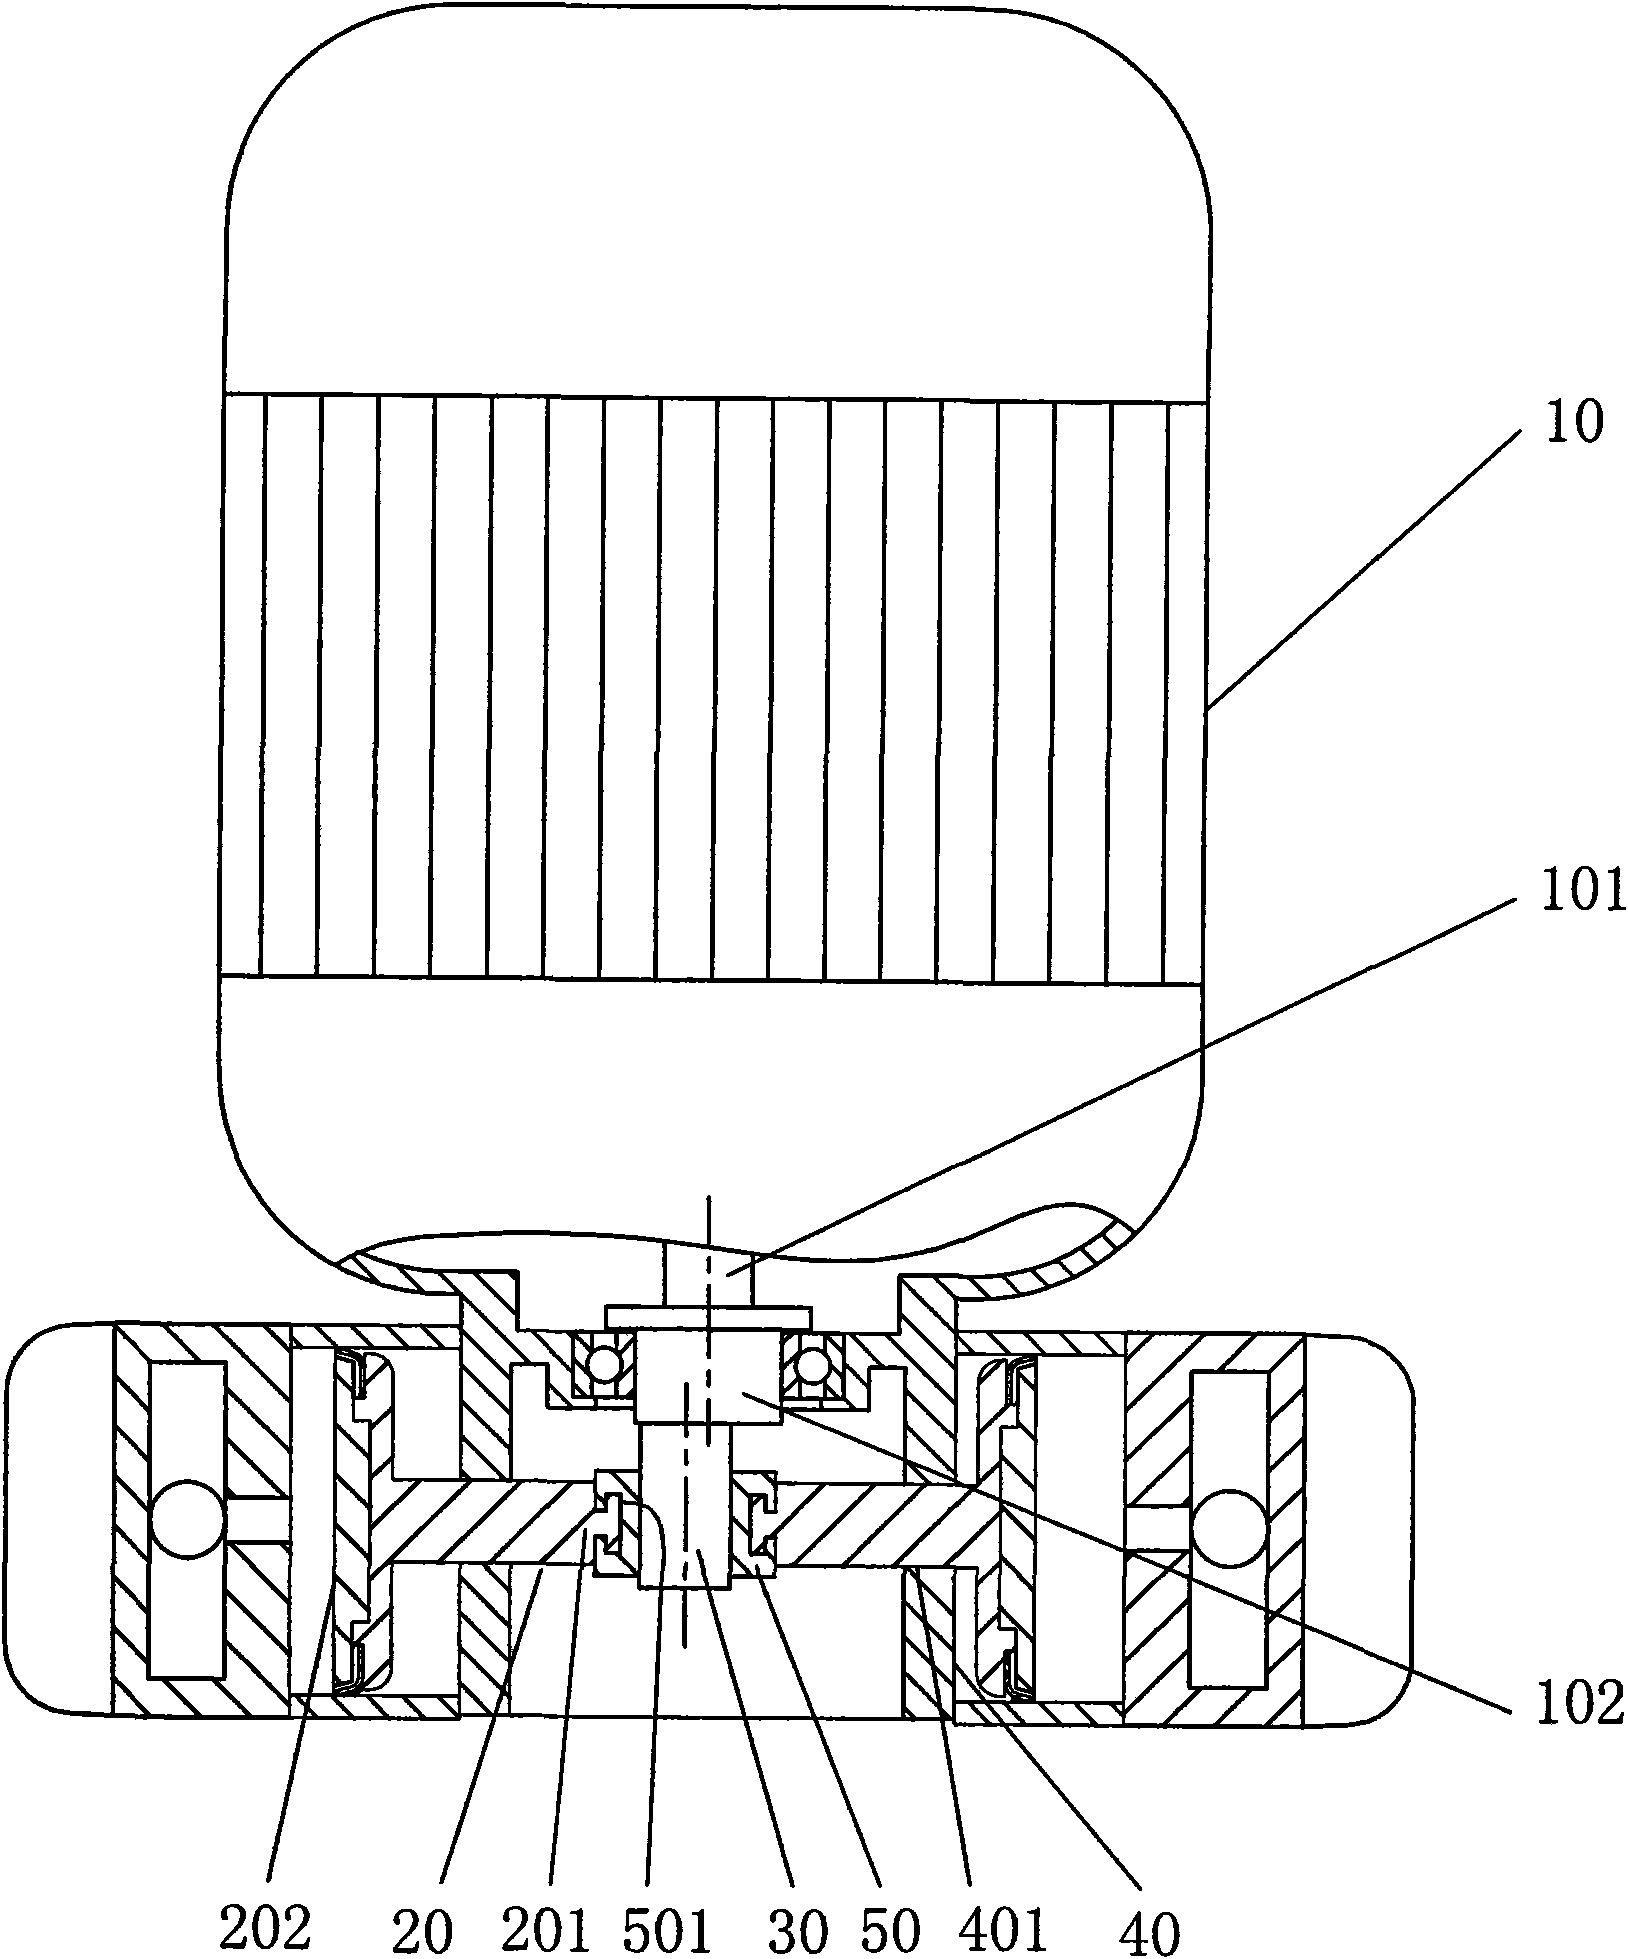 Straight-line reciprocating piston type compressor